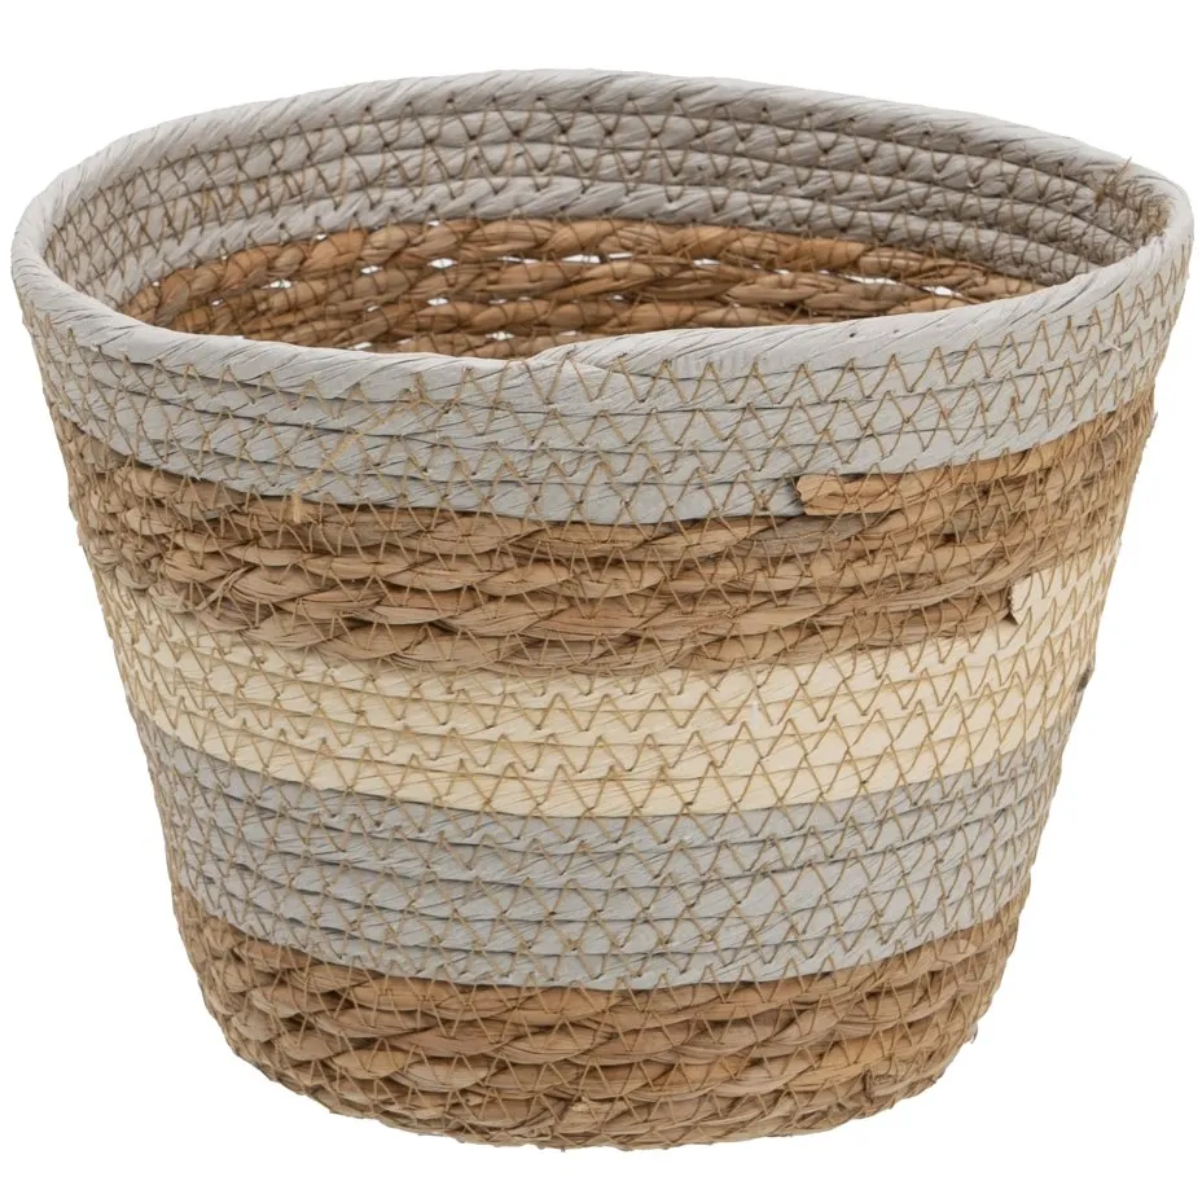 Set of 3 baskets in reed fiber and corn husk